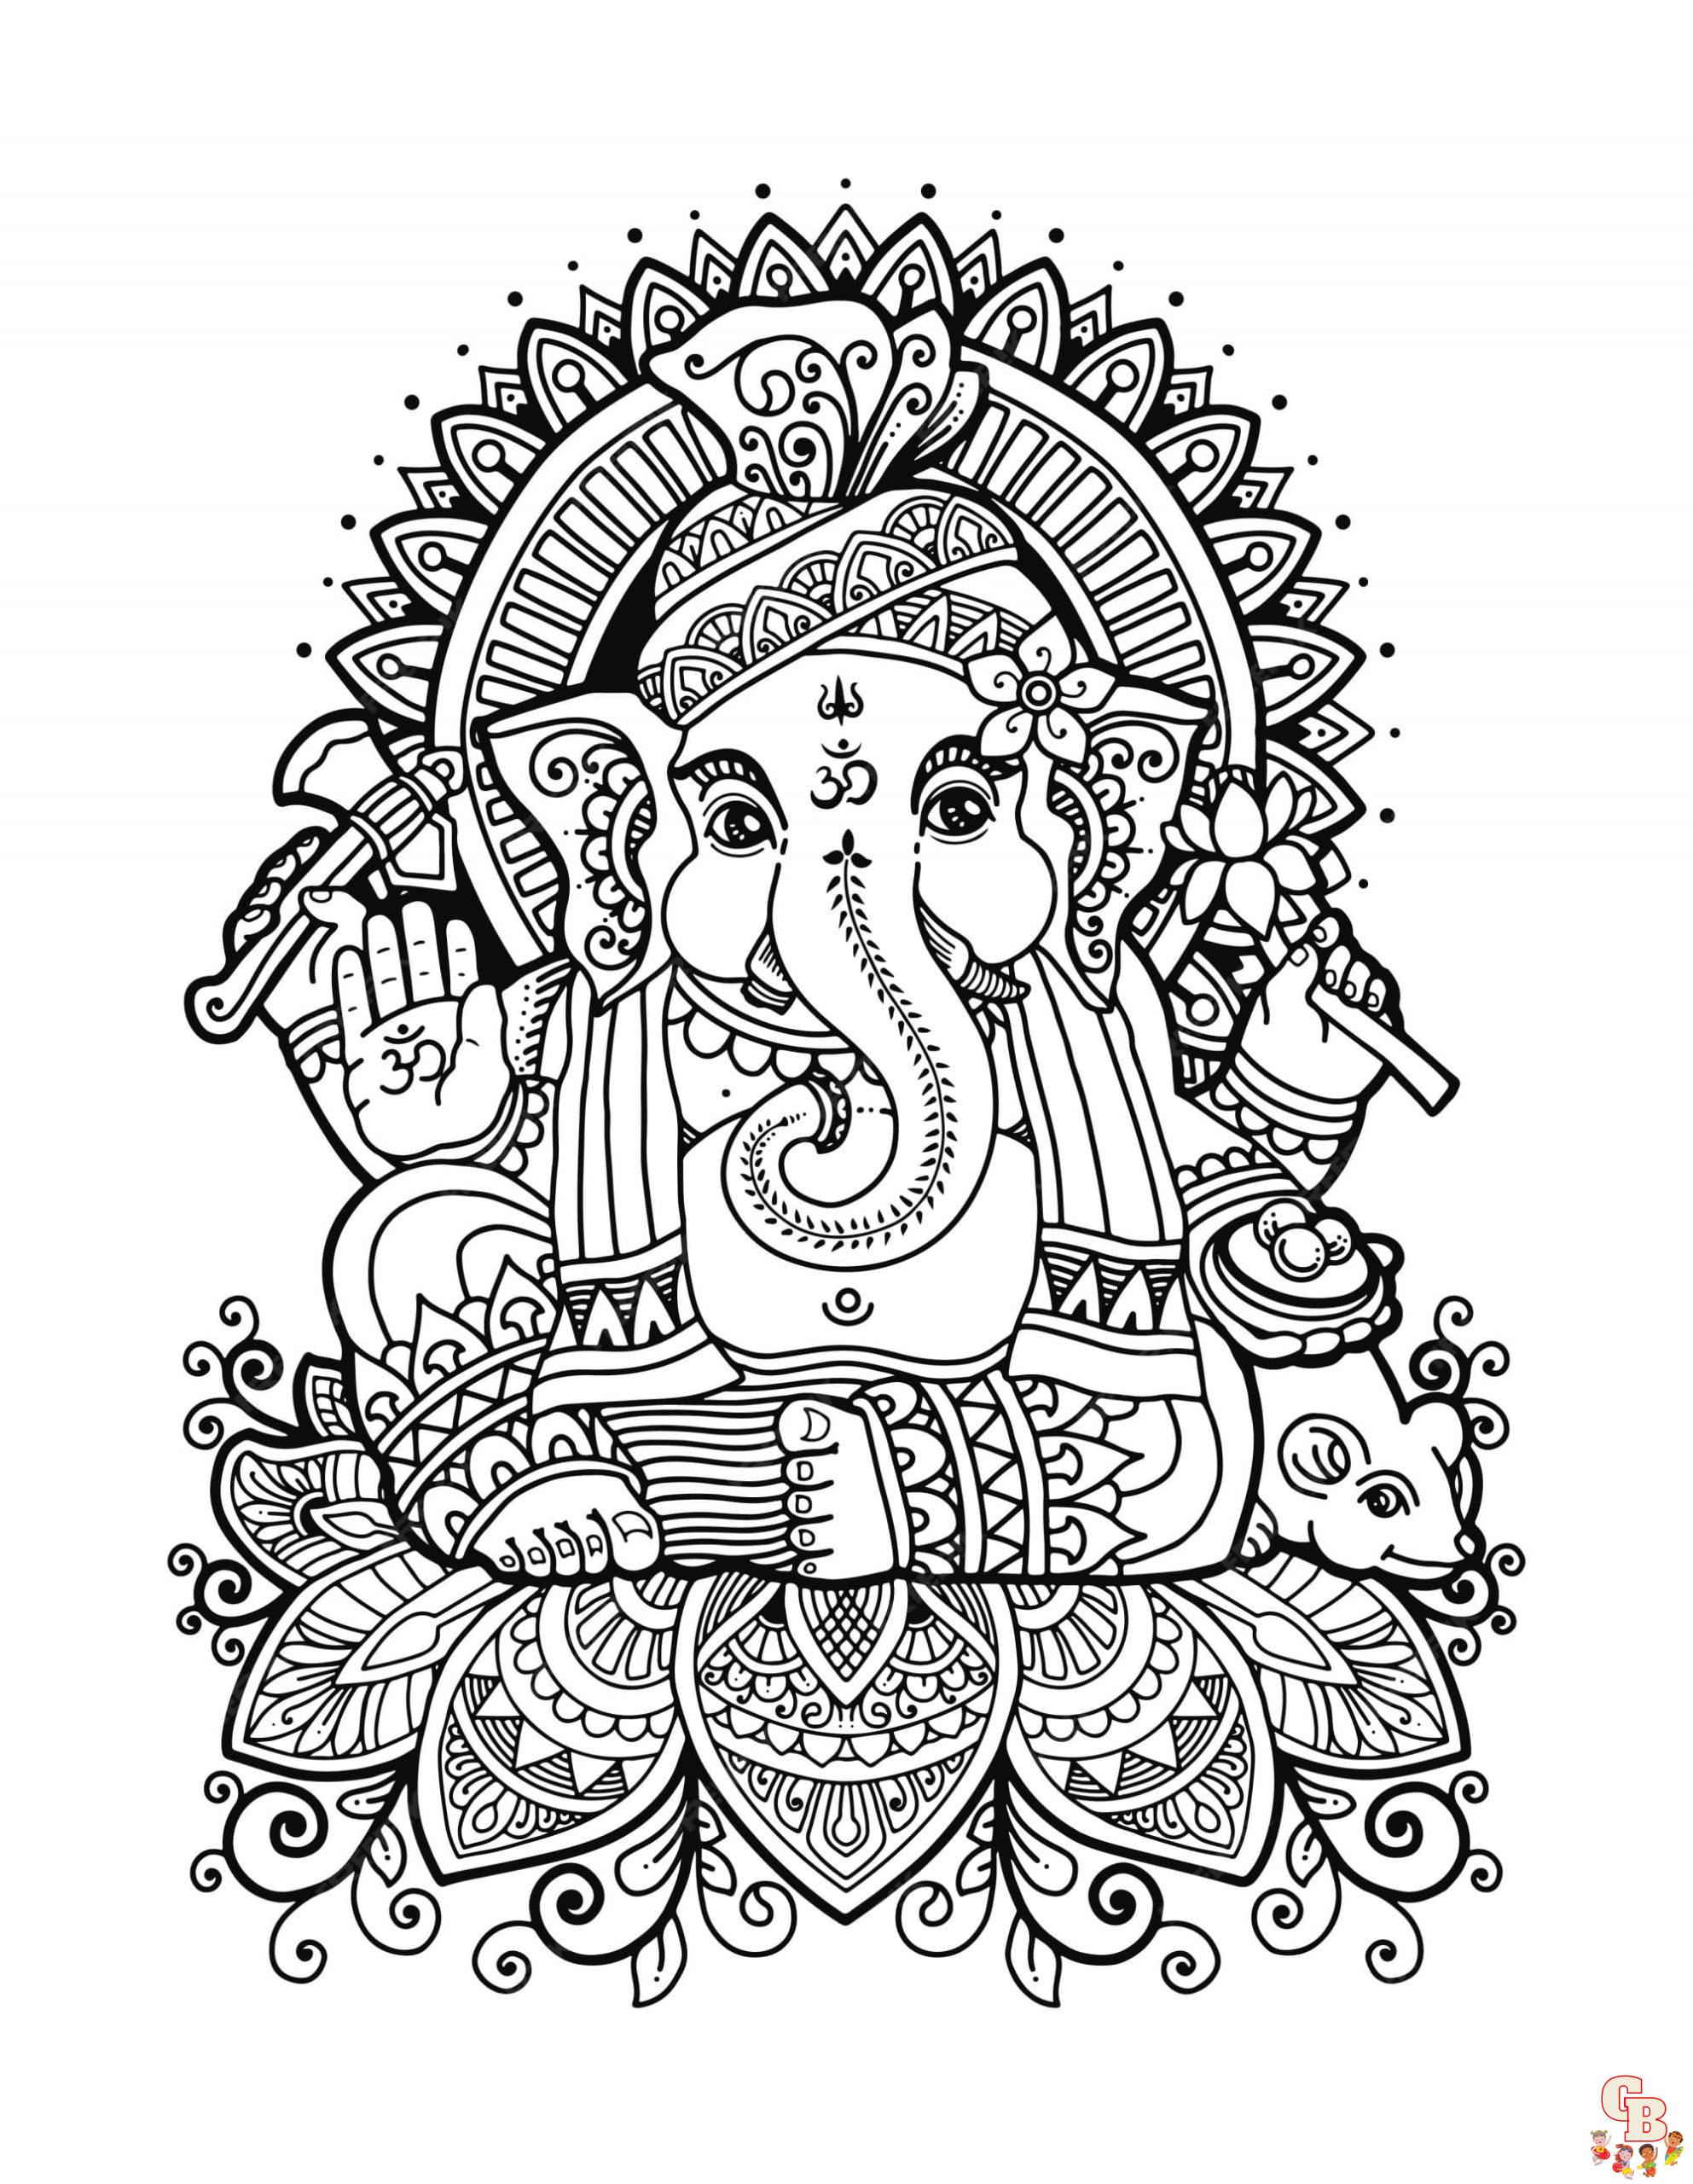 Ganesha coloring pages printable free